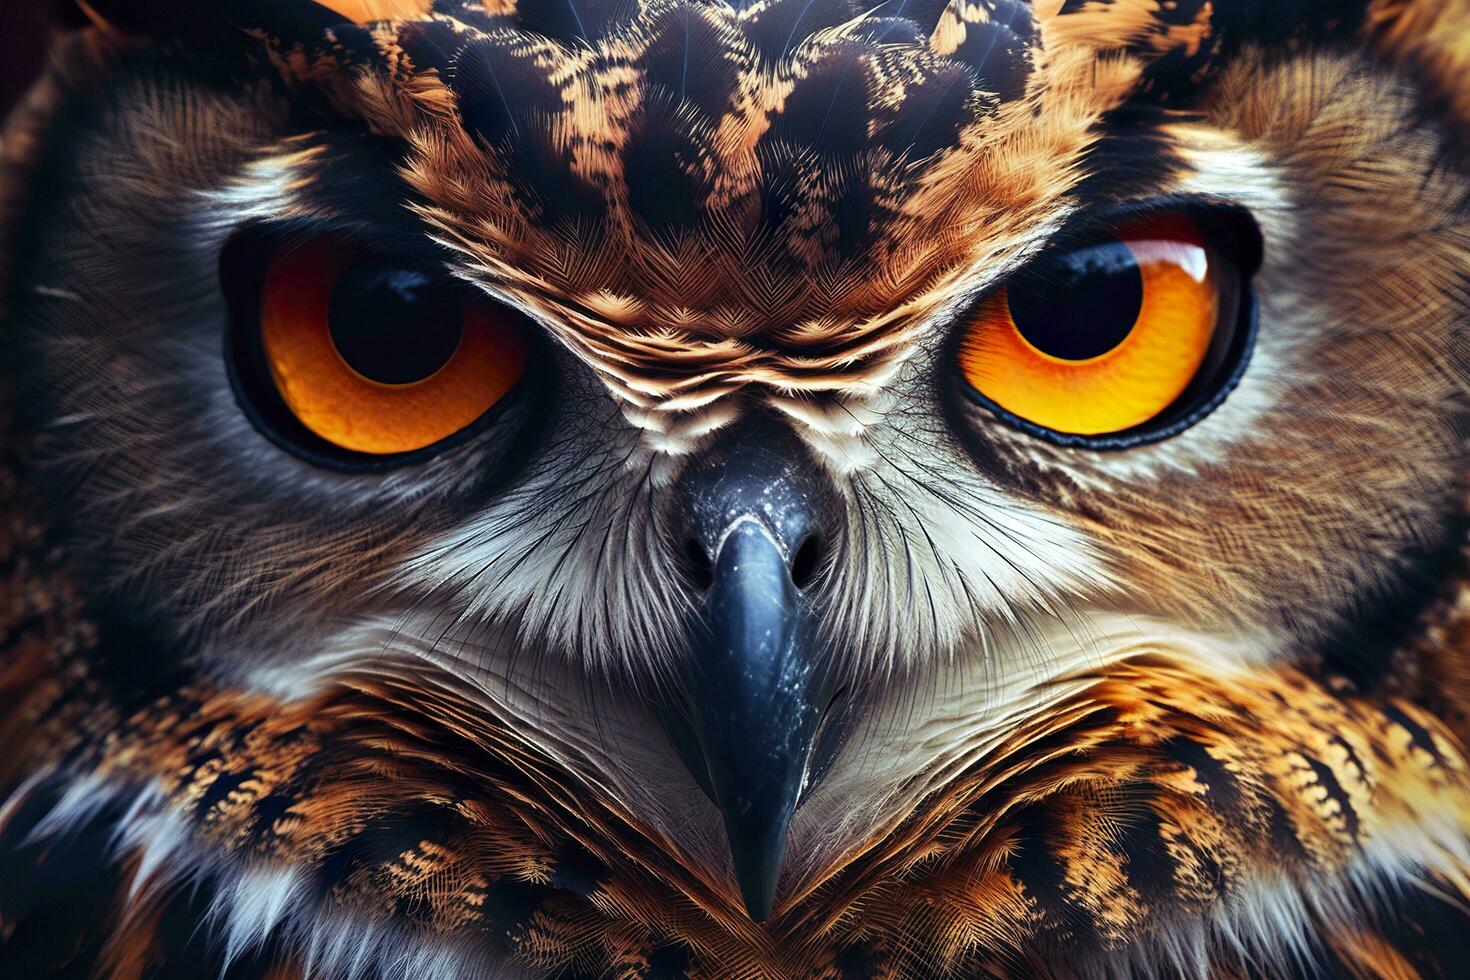 Owl headshot with closeup of face. Generative AI photo